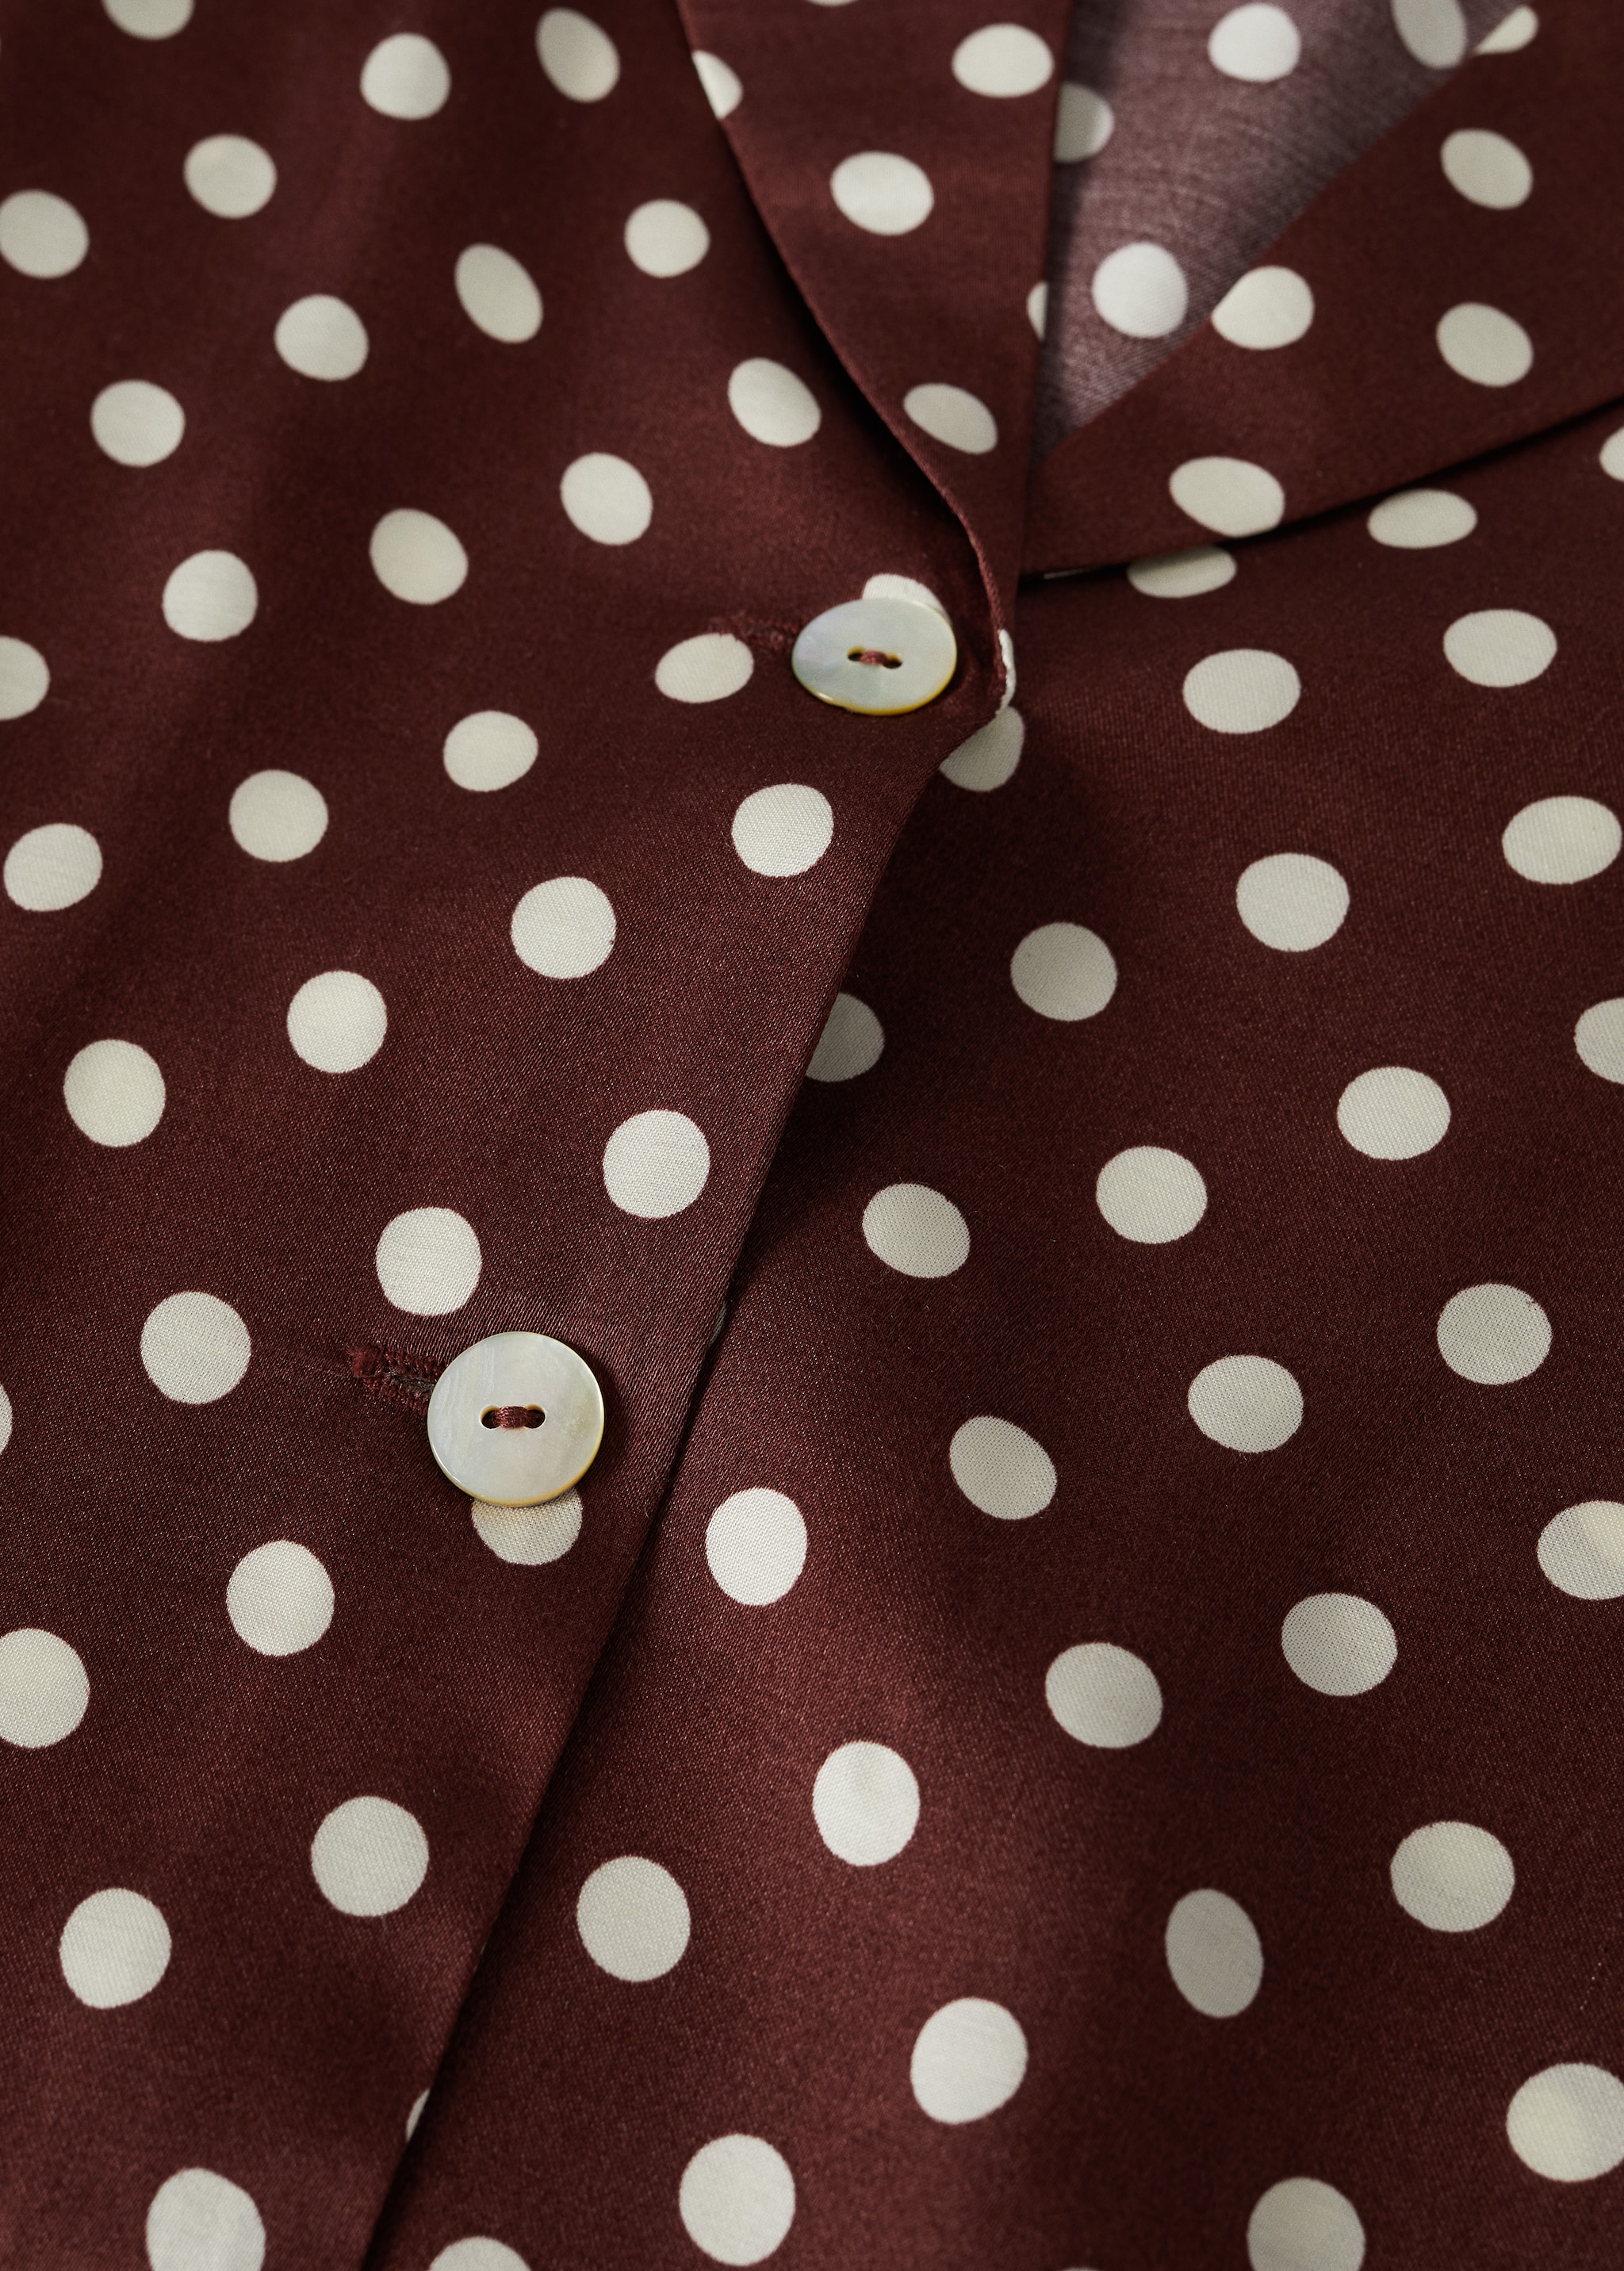 Polka-dot satin-finish shirt - Details of the article 8